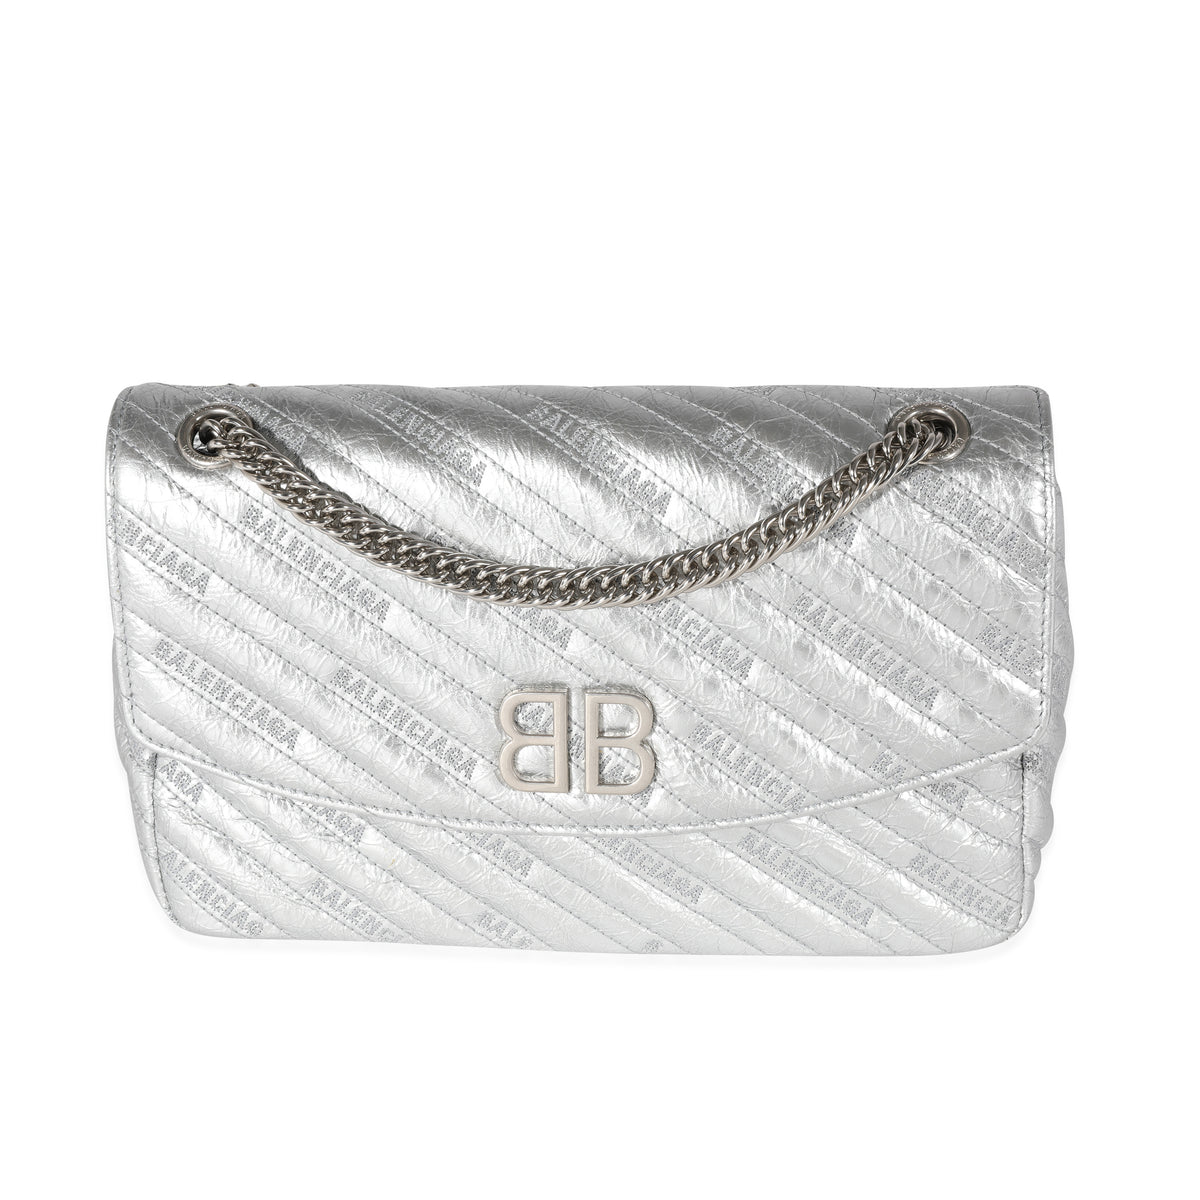 Balenciaga Bb Glittered Leather Shoulder Bag in Metallic